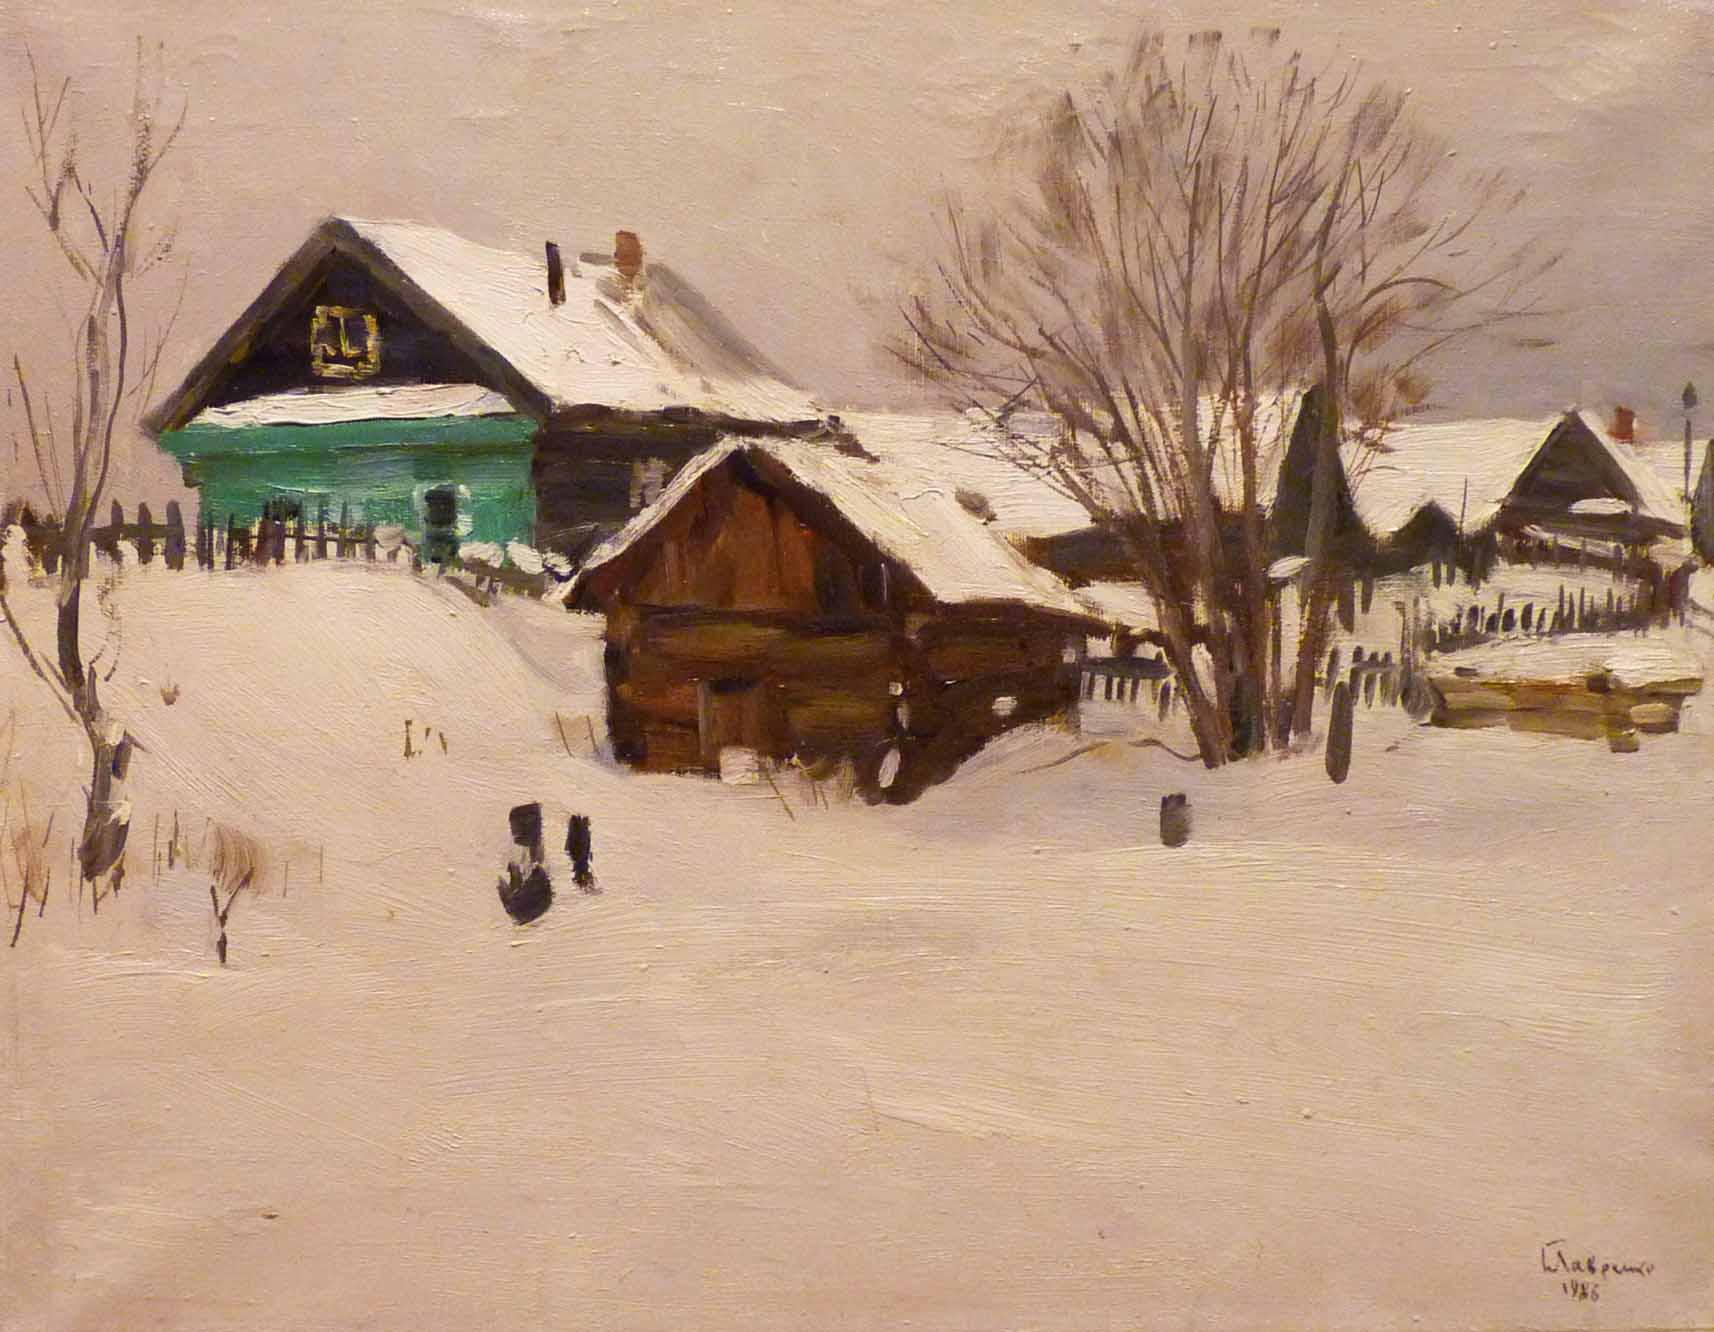 Lavrenko, pittura russa, scuola San Pietroburgo, neve, villaggio